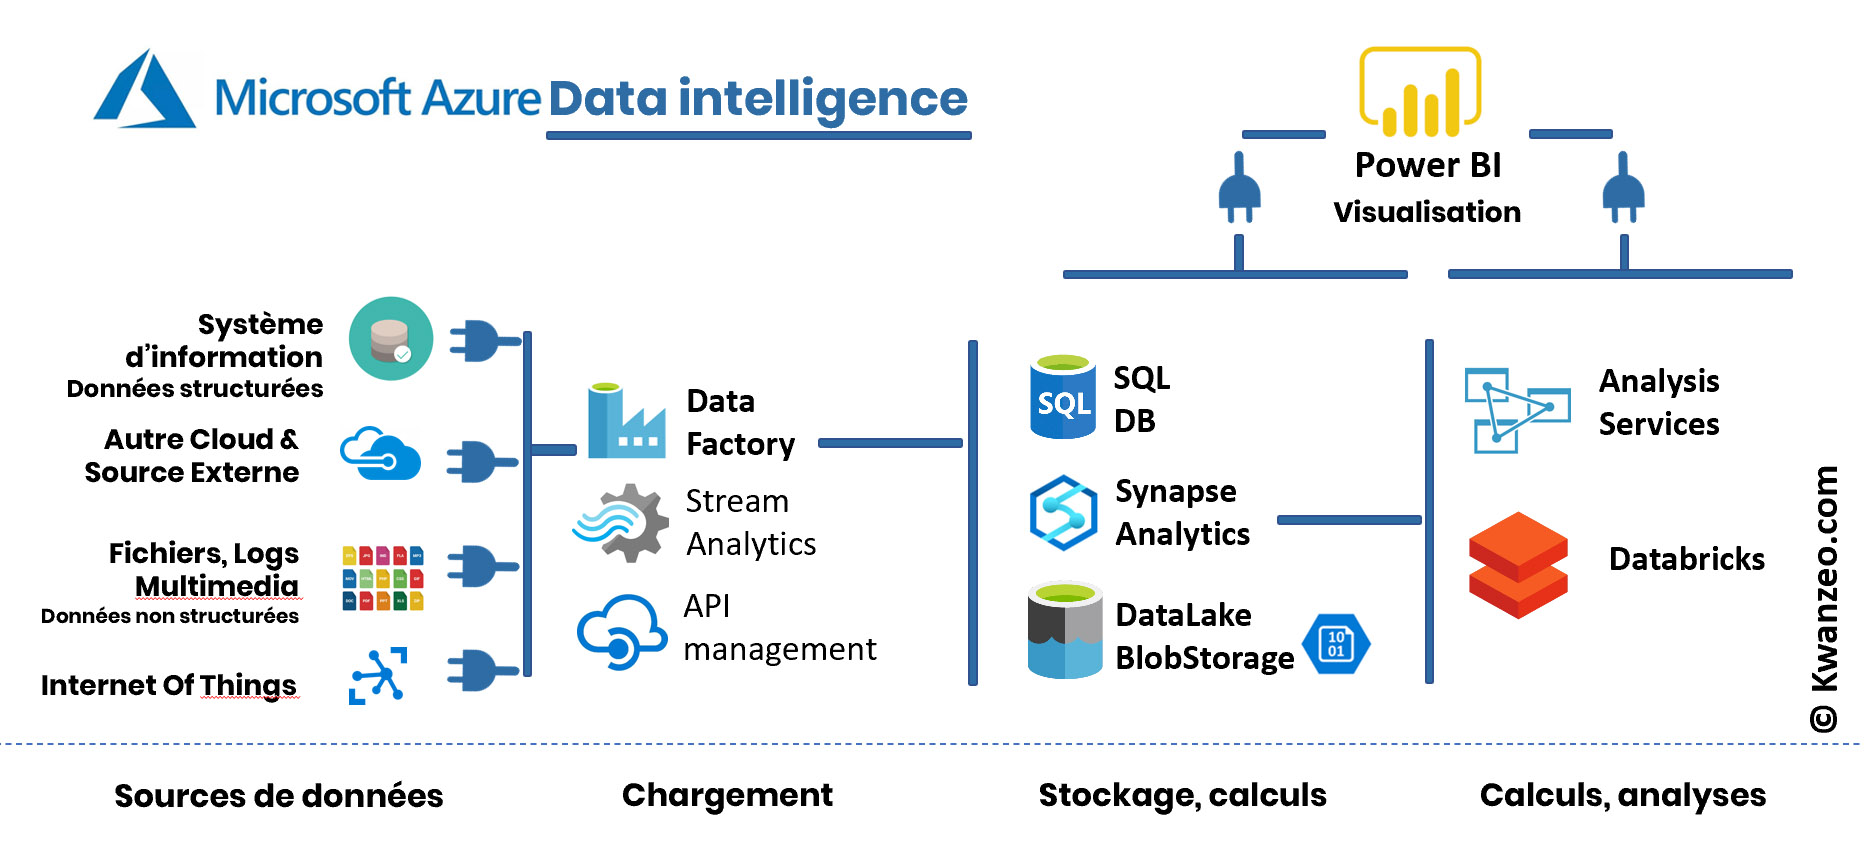 Microsoft Azure Data Intelligence